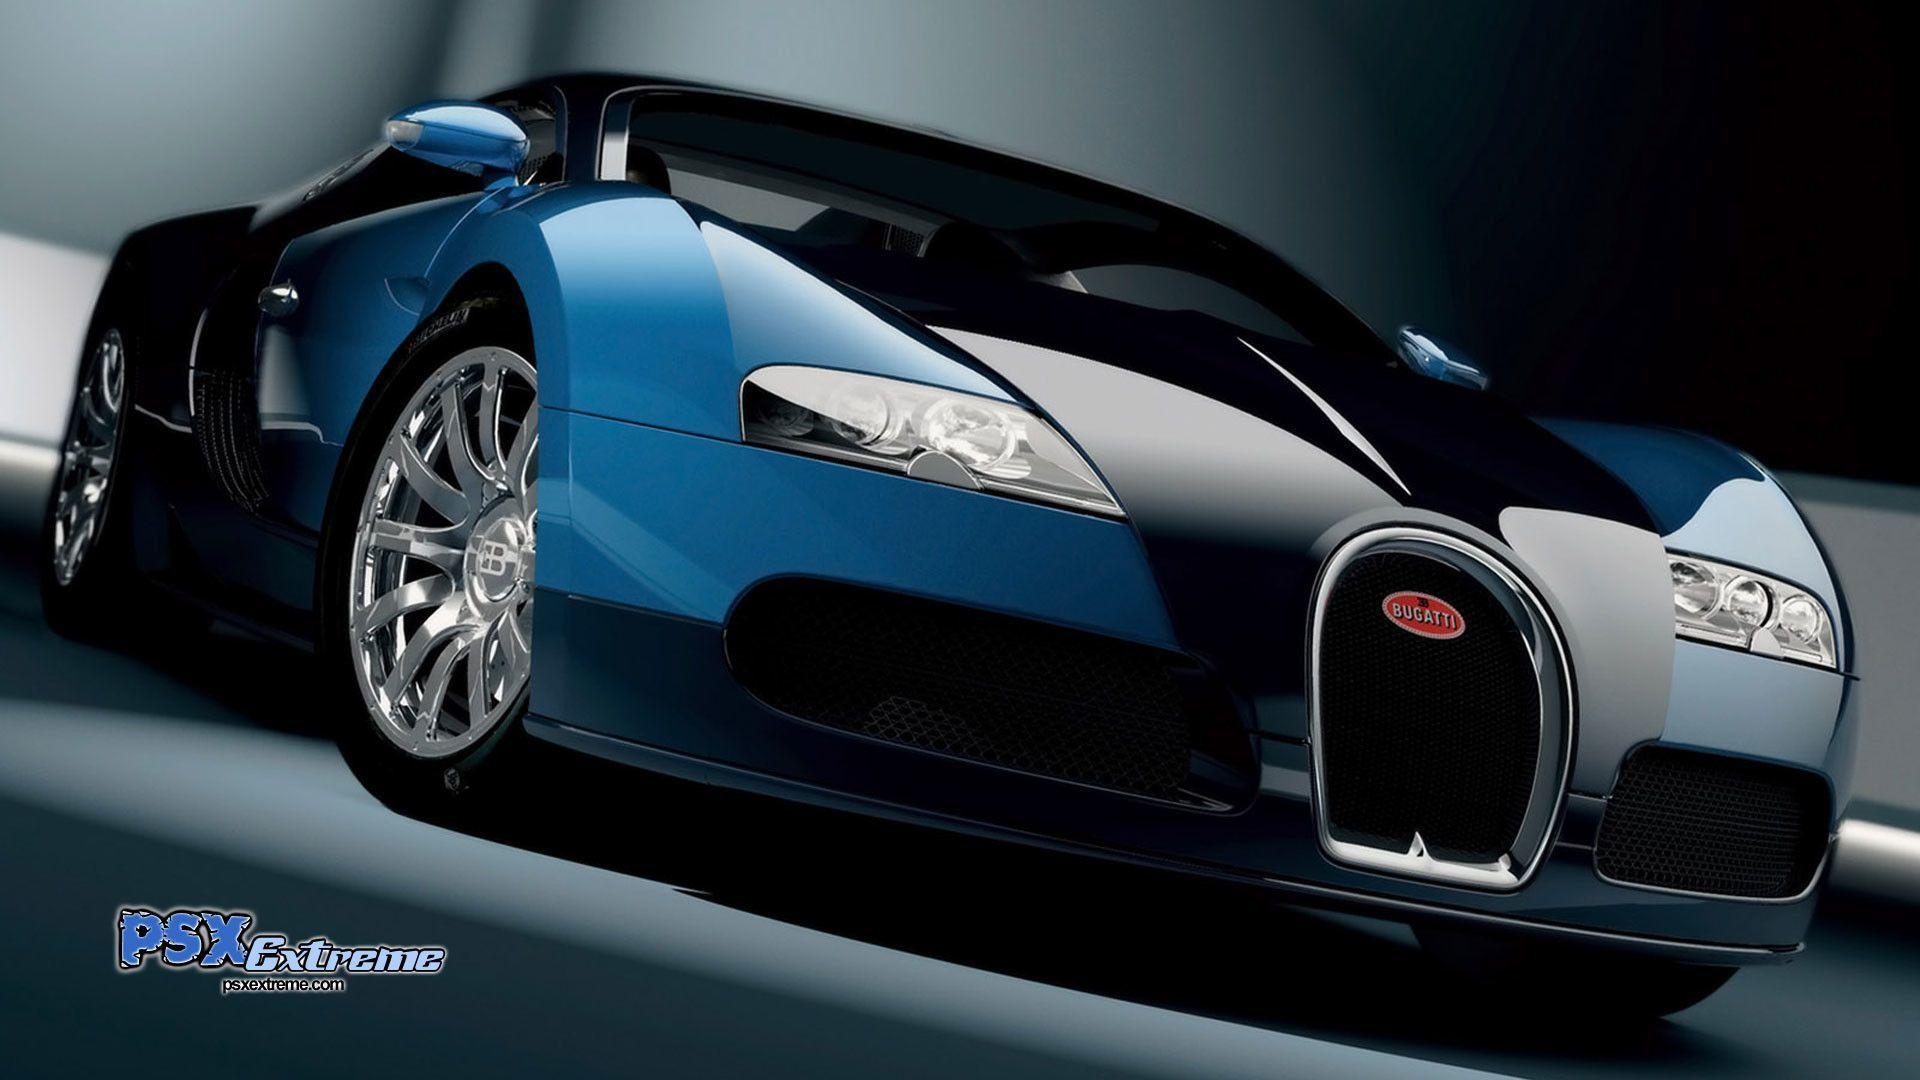 Bugatti Veyron Super Sport Wallpapers Top Free Bugatti Veyron Super Sport Backgrounds Wallpaperaccess